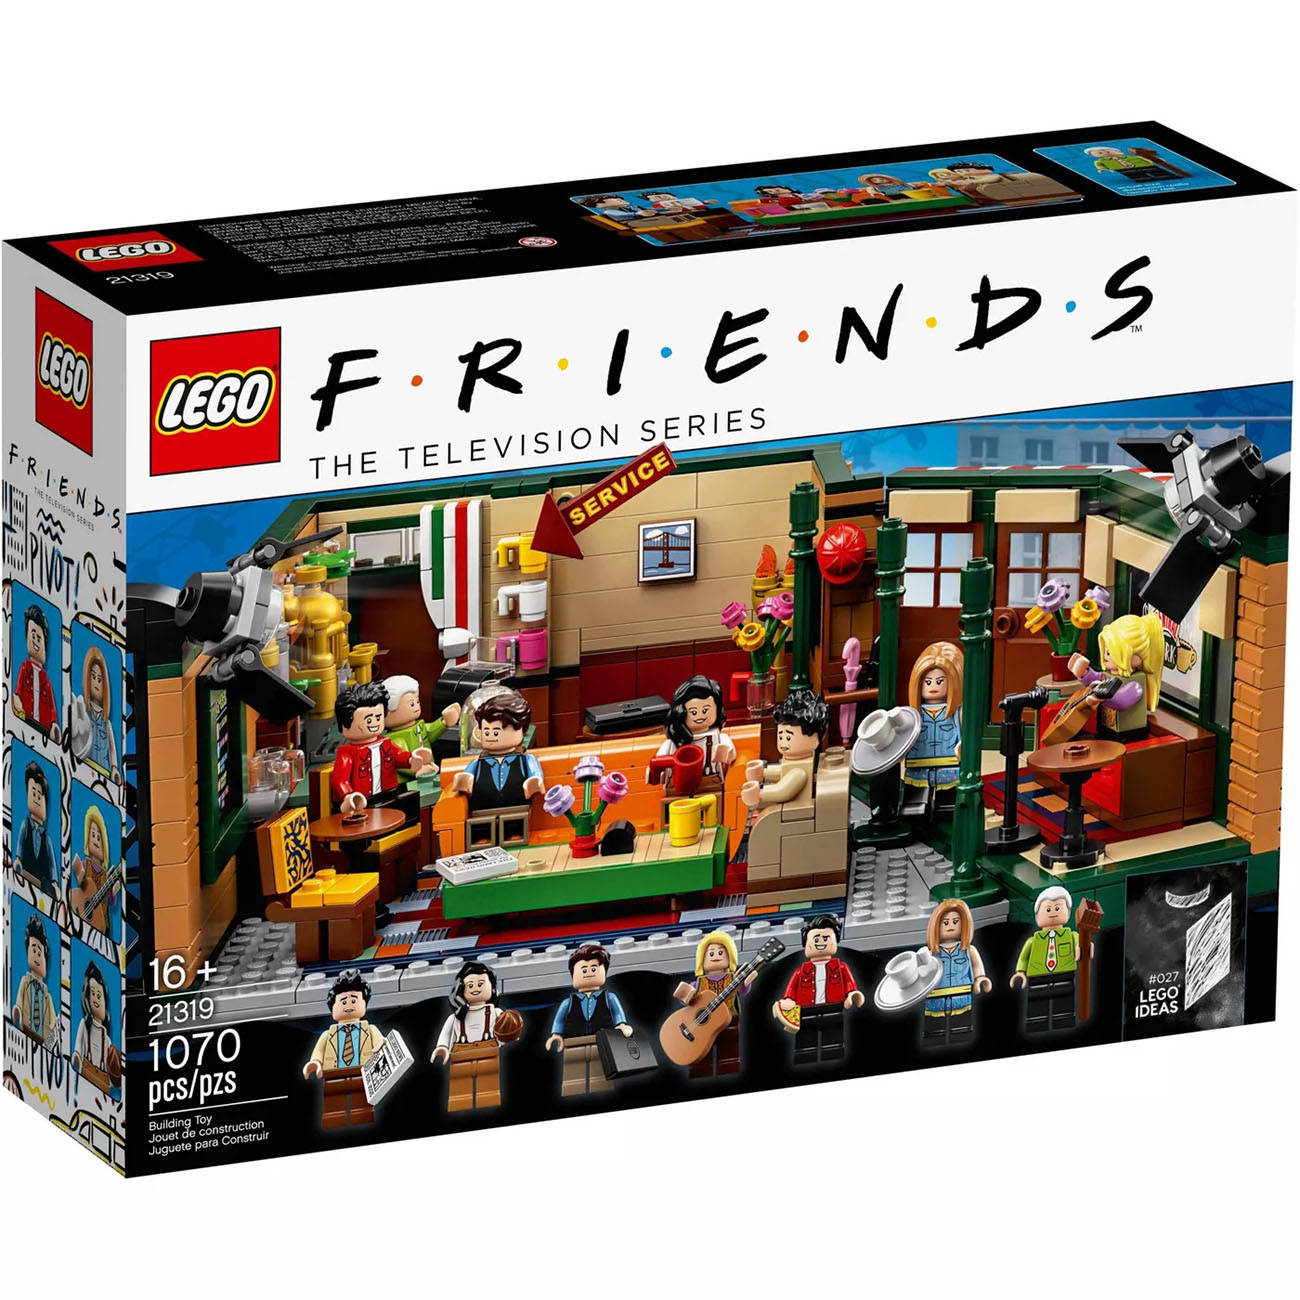 A Friends Central Perk Lego Set! Such a fun gift!